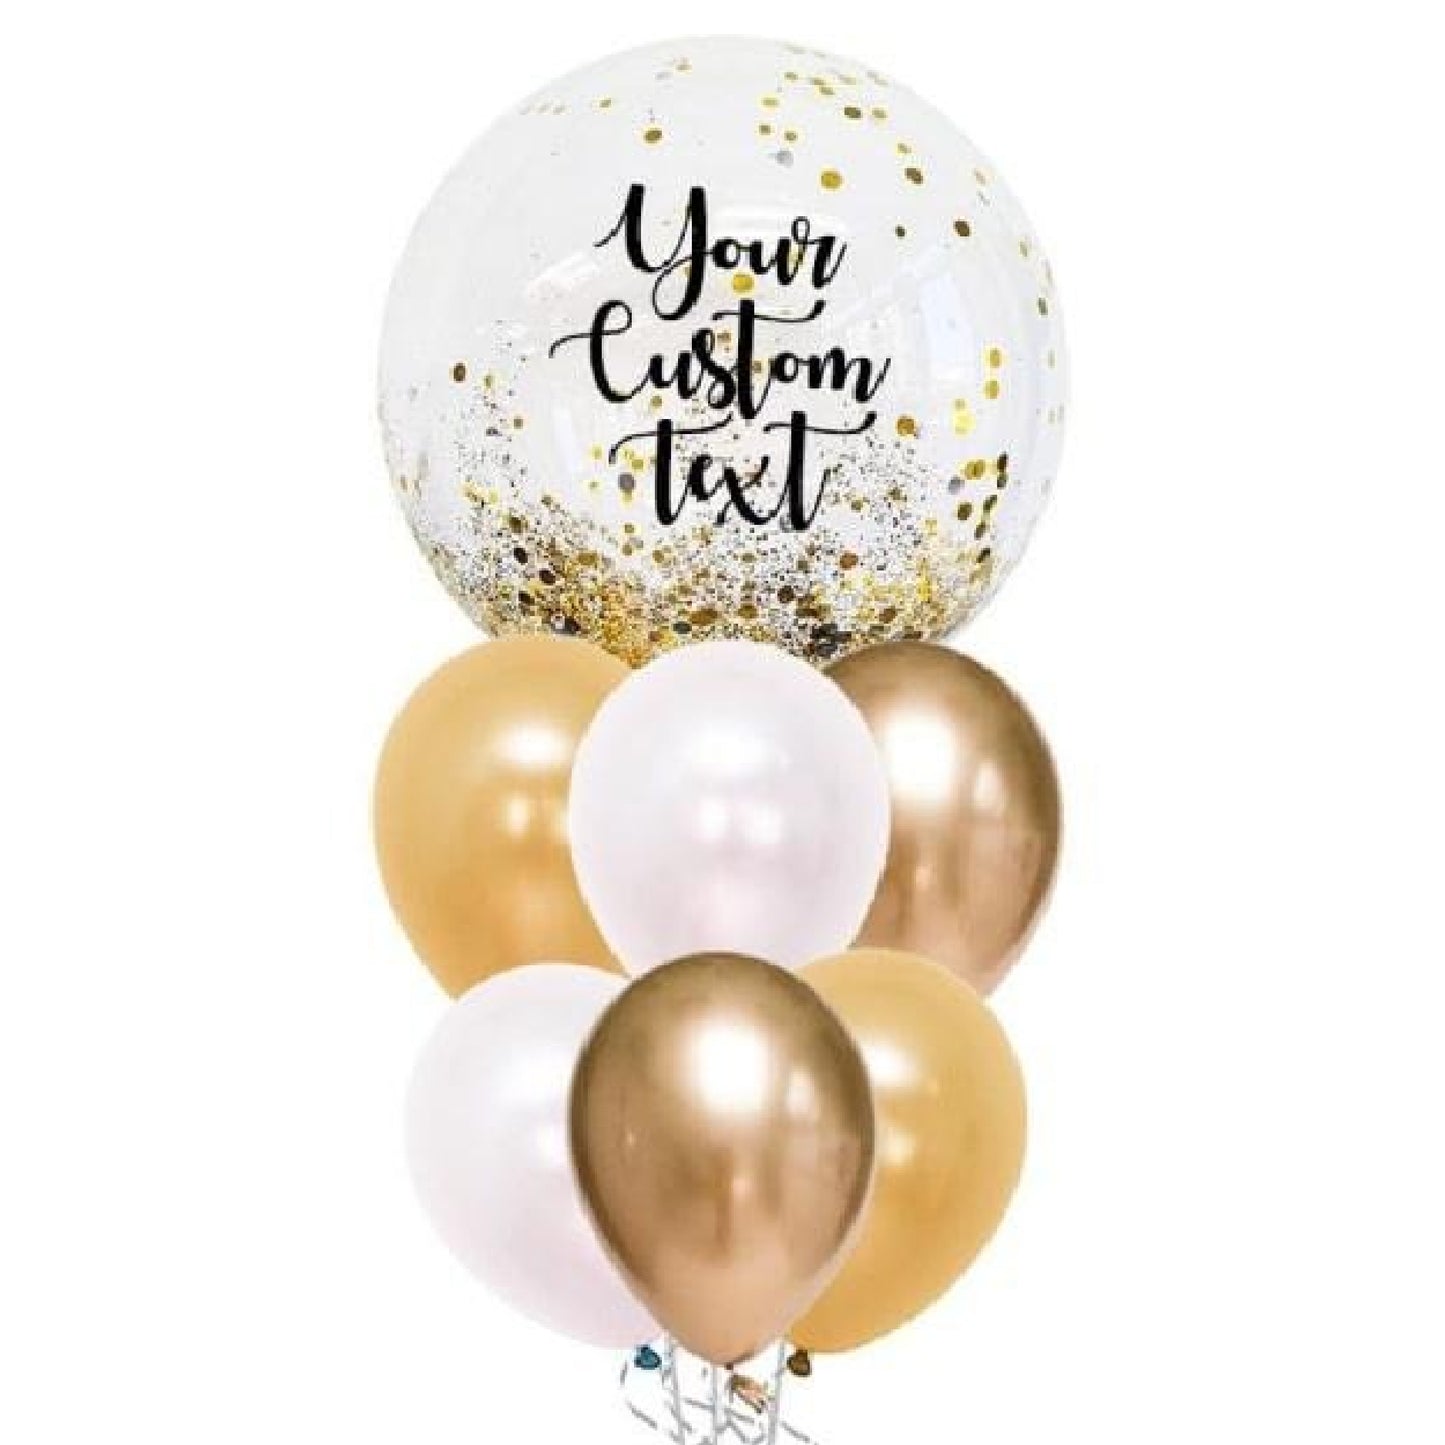 Customized Gold Confetti Balloon Bouquet